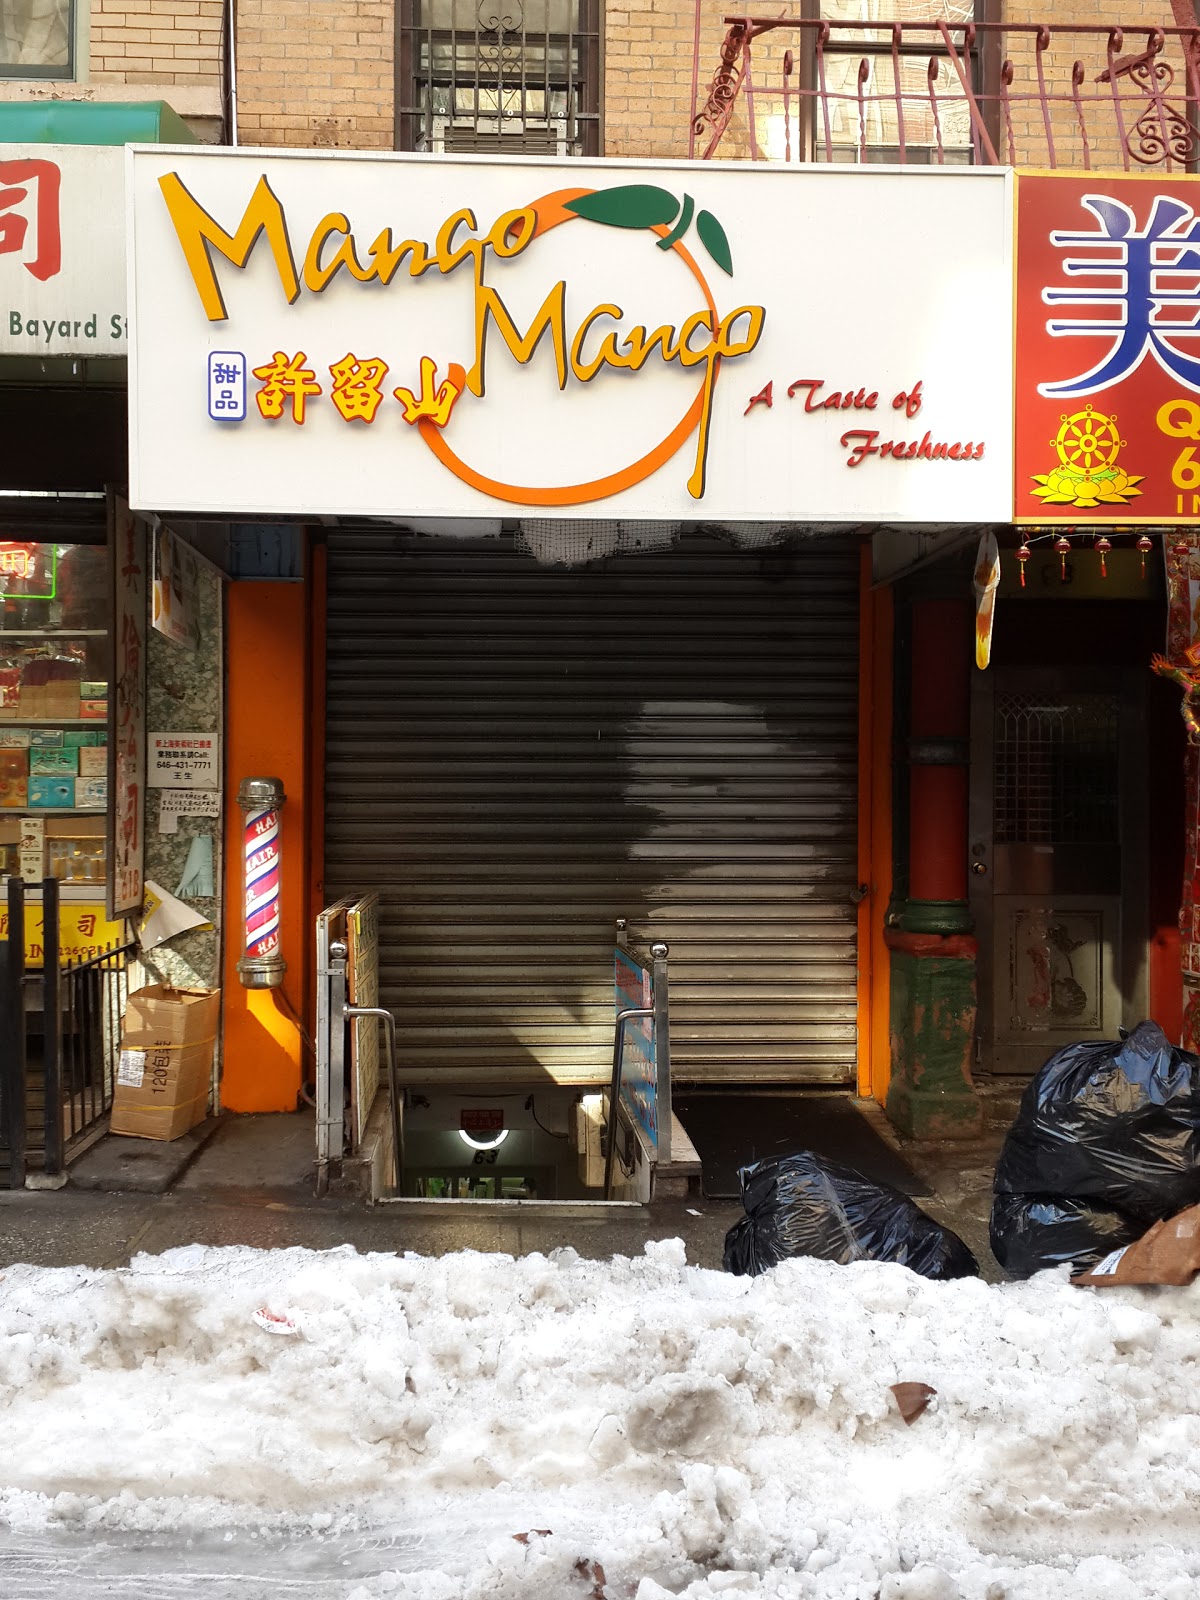 Photo of Mango Mango Dessert in New York City, New York, United States - 3 Picture of Food, Point of interest, Establishment